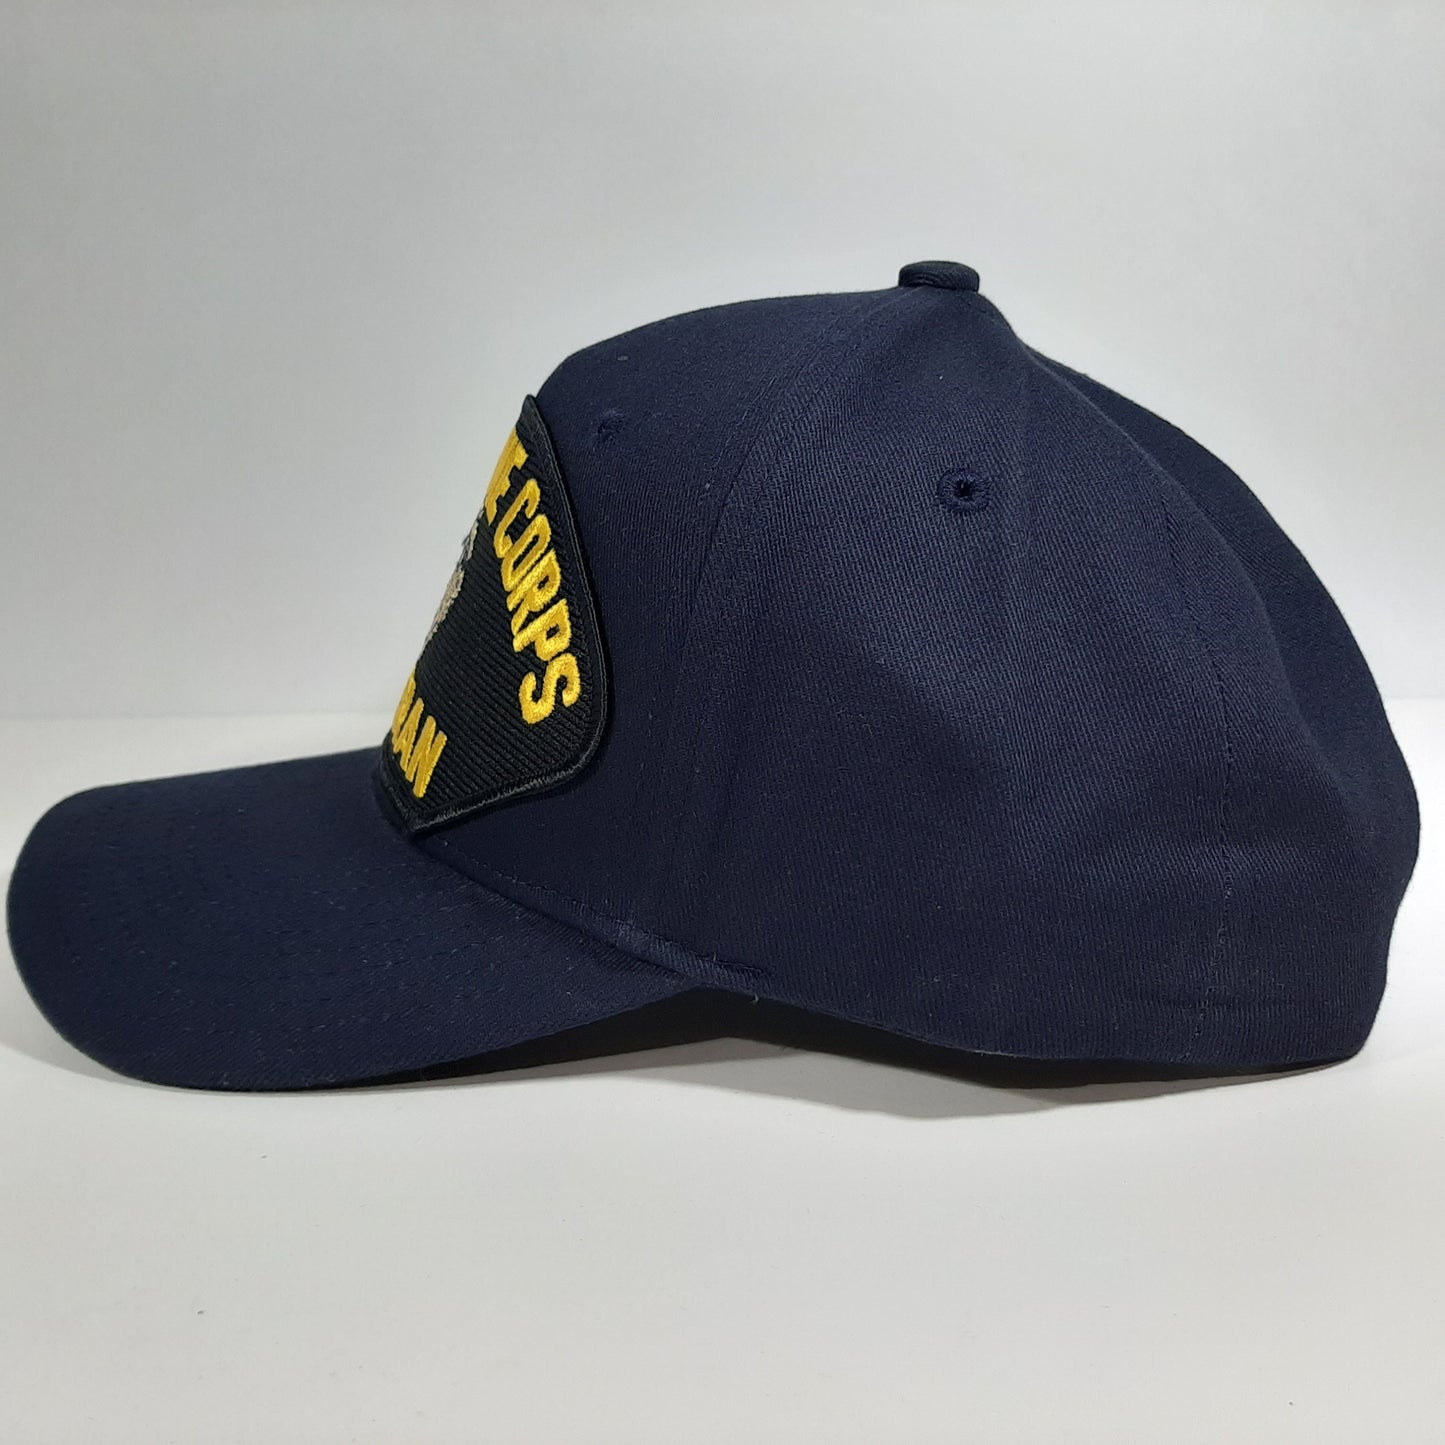 U.S. Marine Corps Veteran Baseball Cap Hat Navy Blue 100% Acrylic